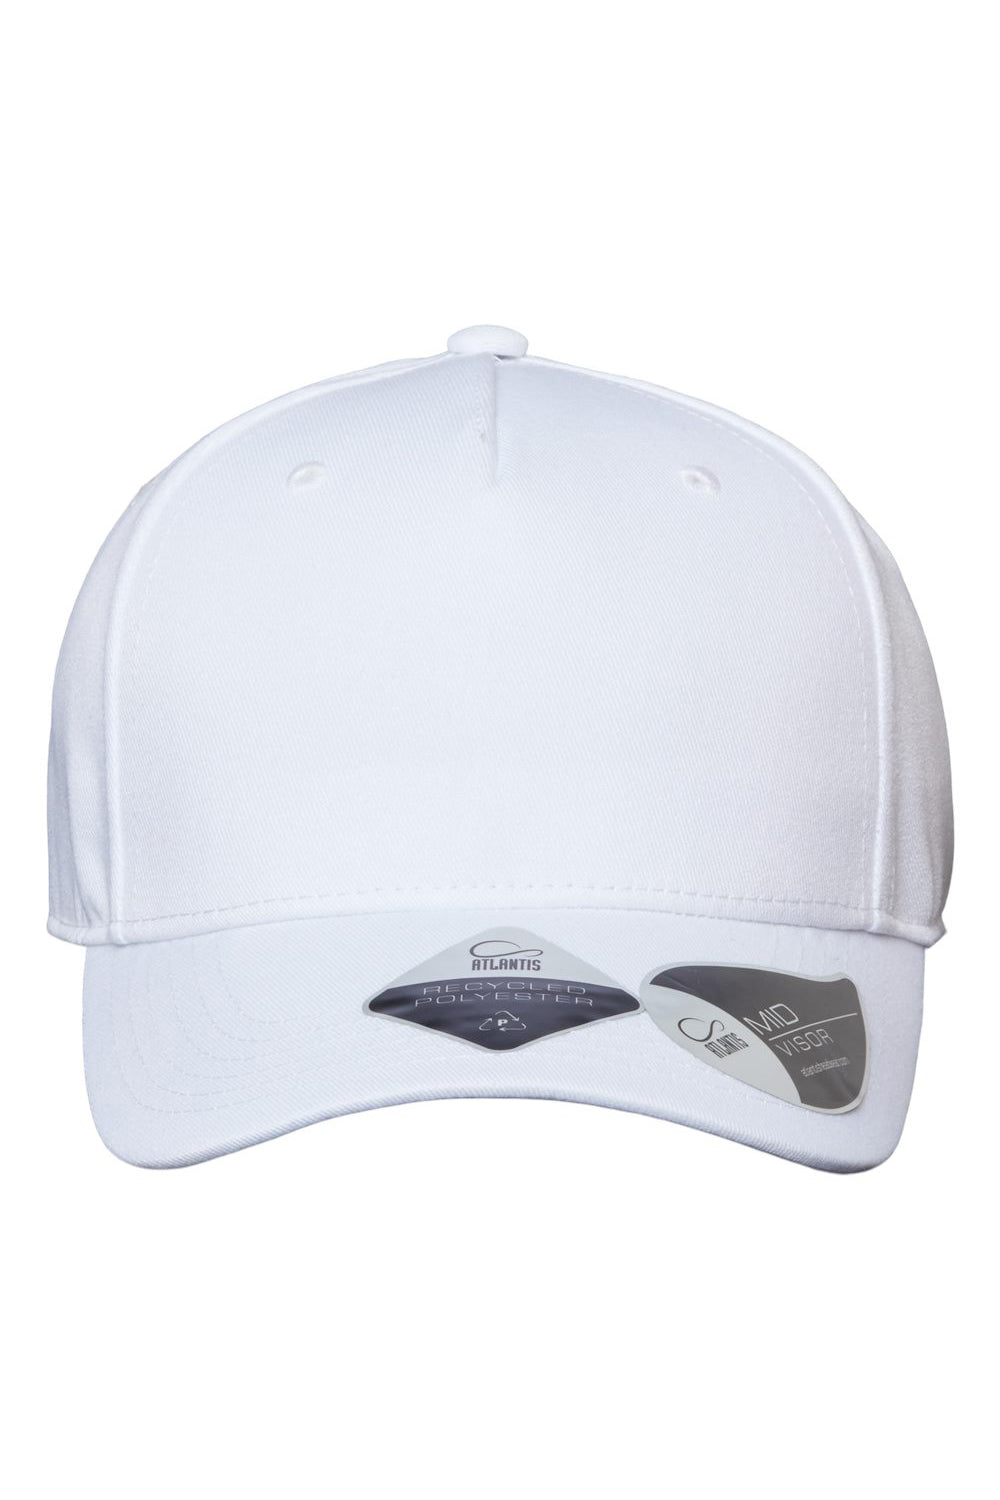 Atlantis Headwear FIJI Mens Sustainable Adjustable Hat White Flat Front